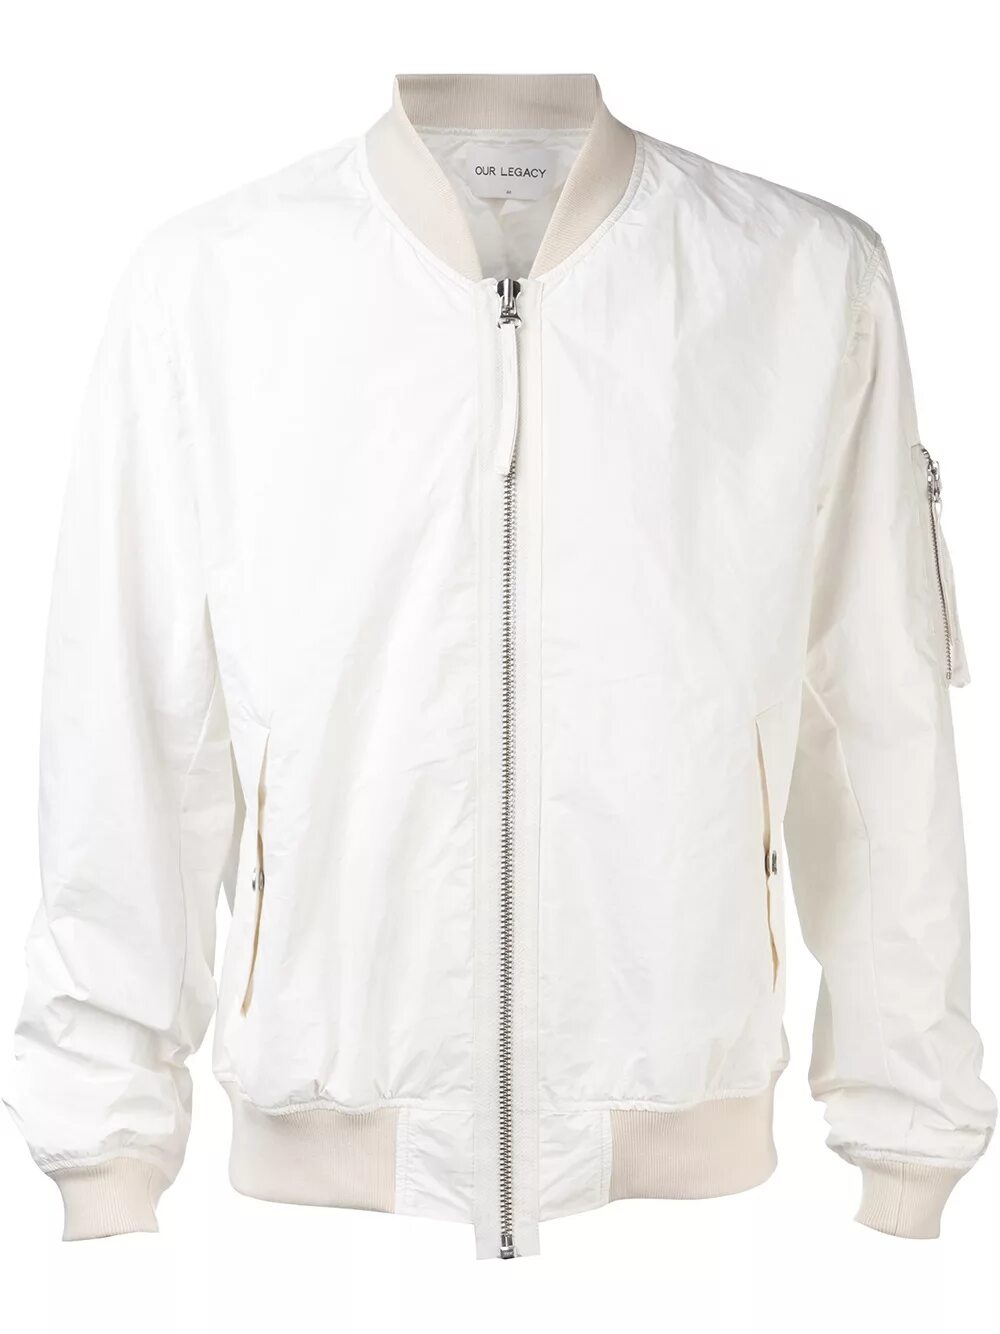 White jacket. Бомбер DKNY мужские белая. Куртка Alcott мужская бомбер белый. Бомбер Zara белый мужской. Пулбир мужской белый бомбер 2021.